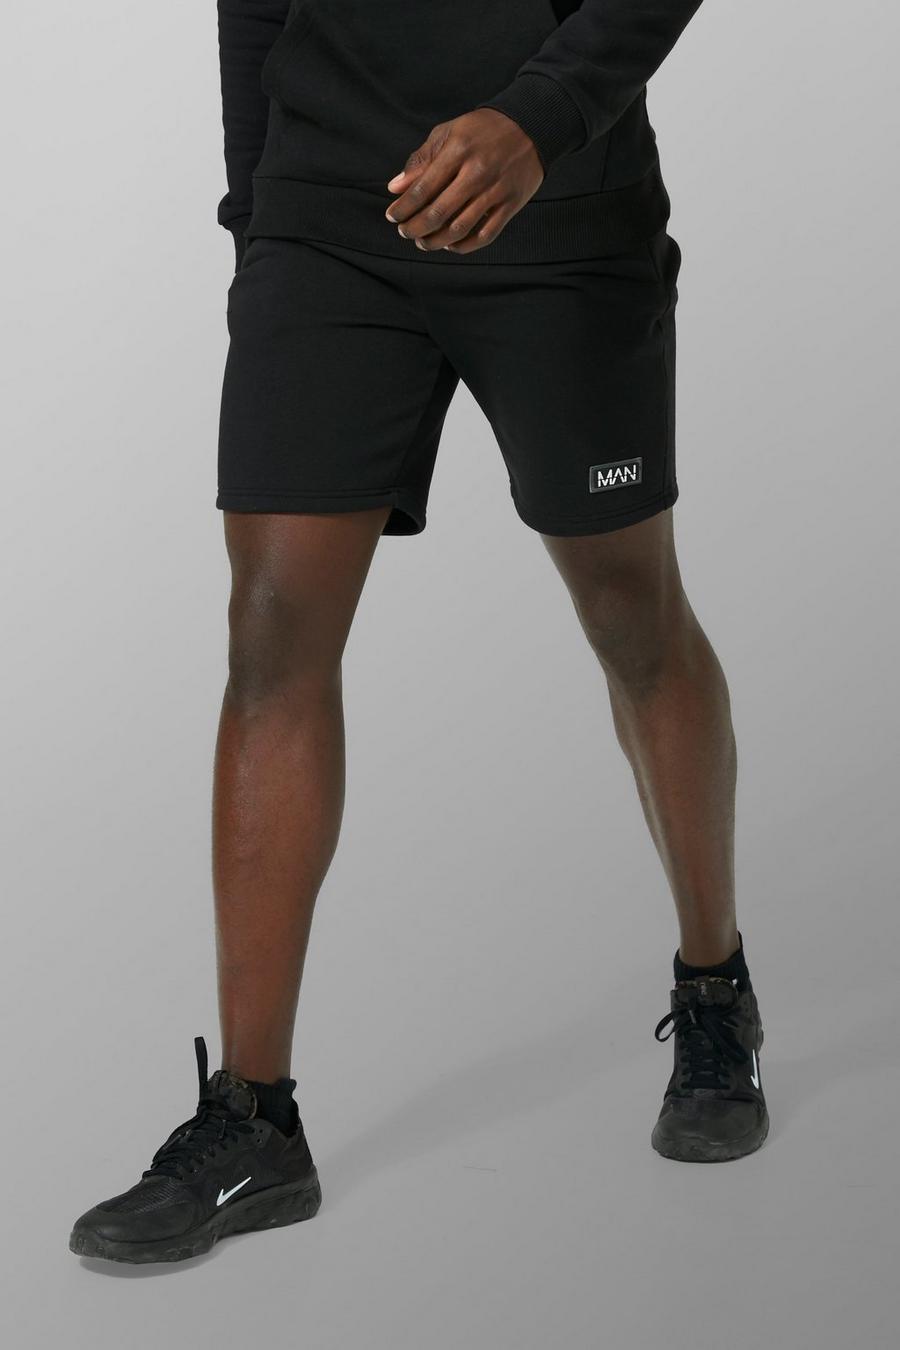 Black noir Man Active Training Shorts